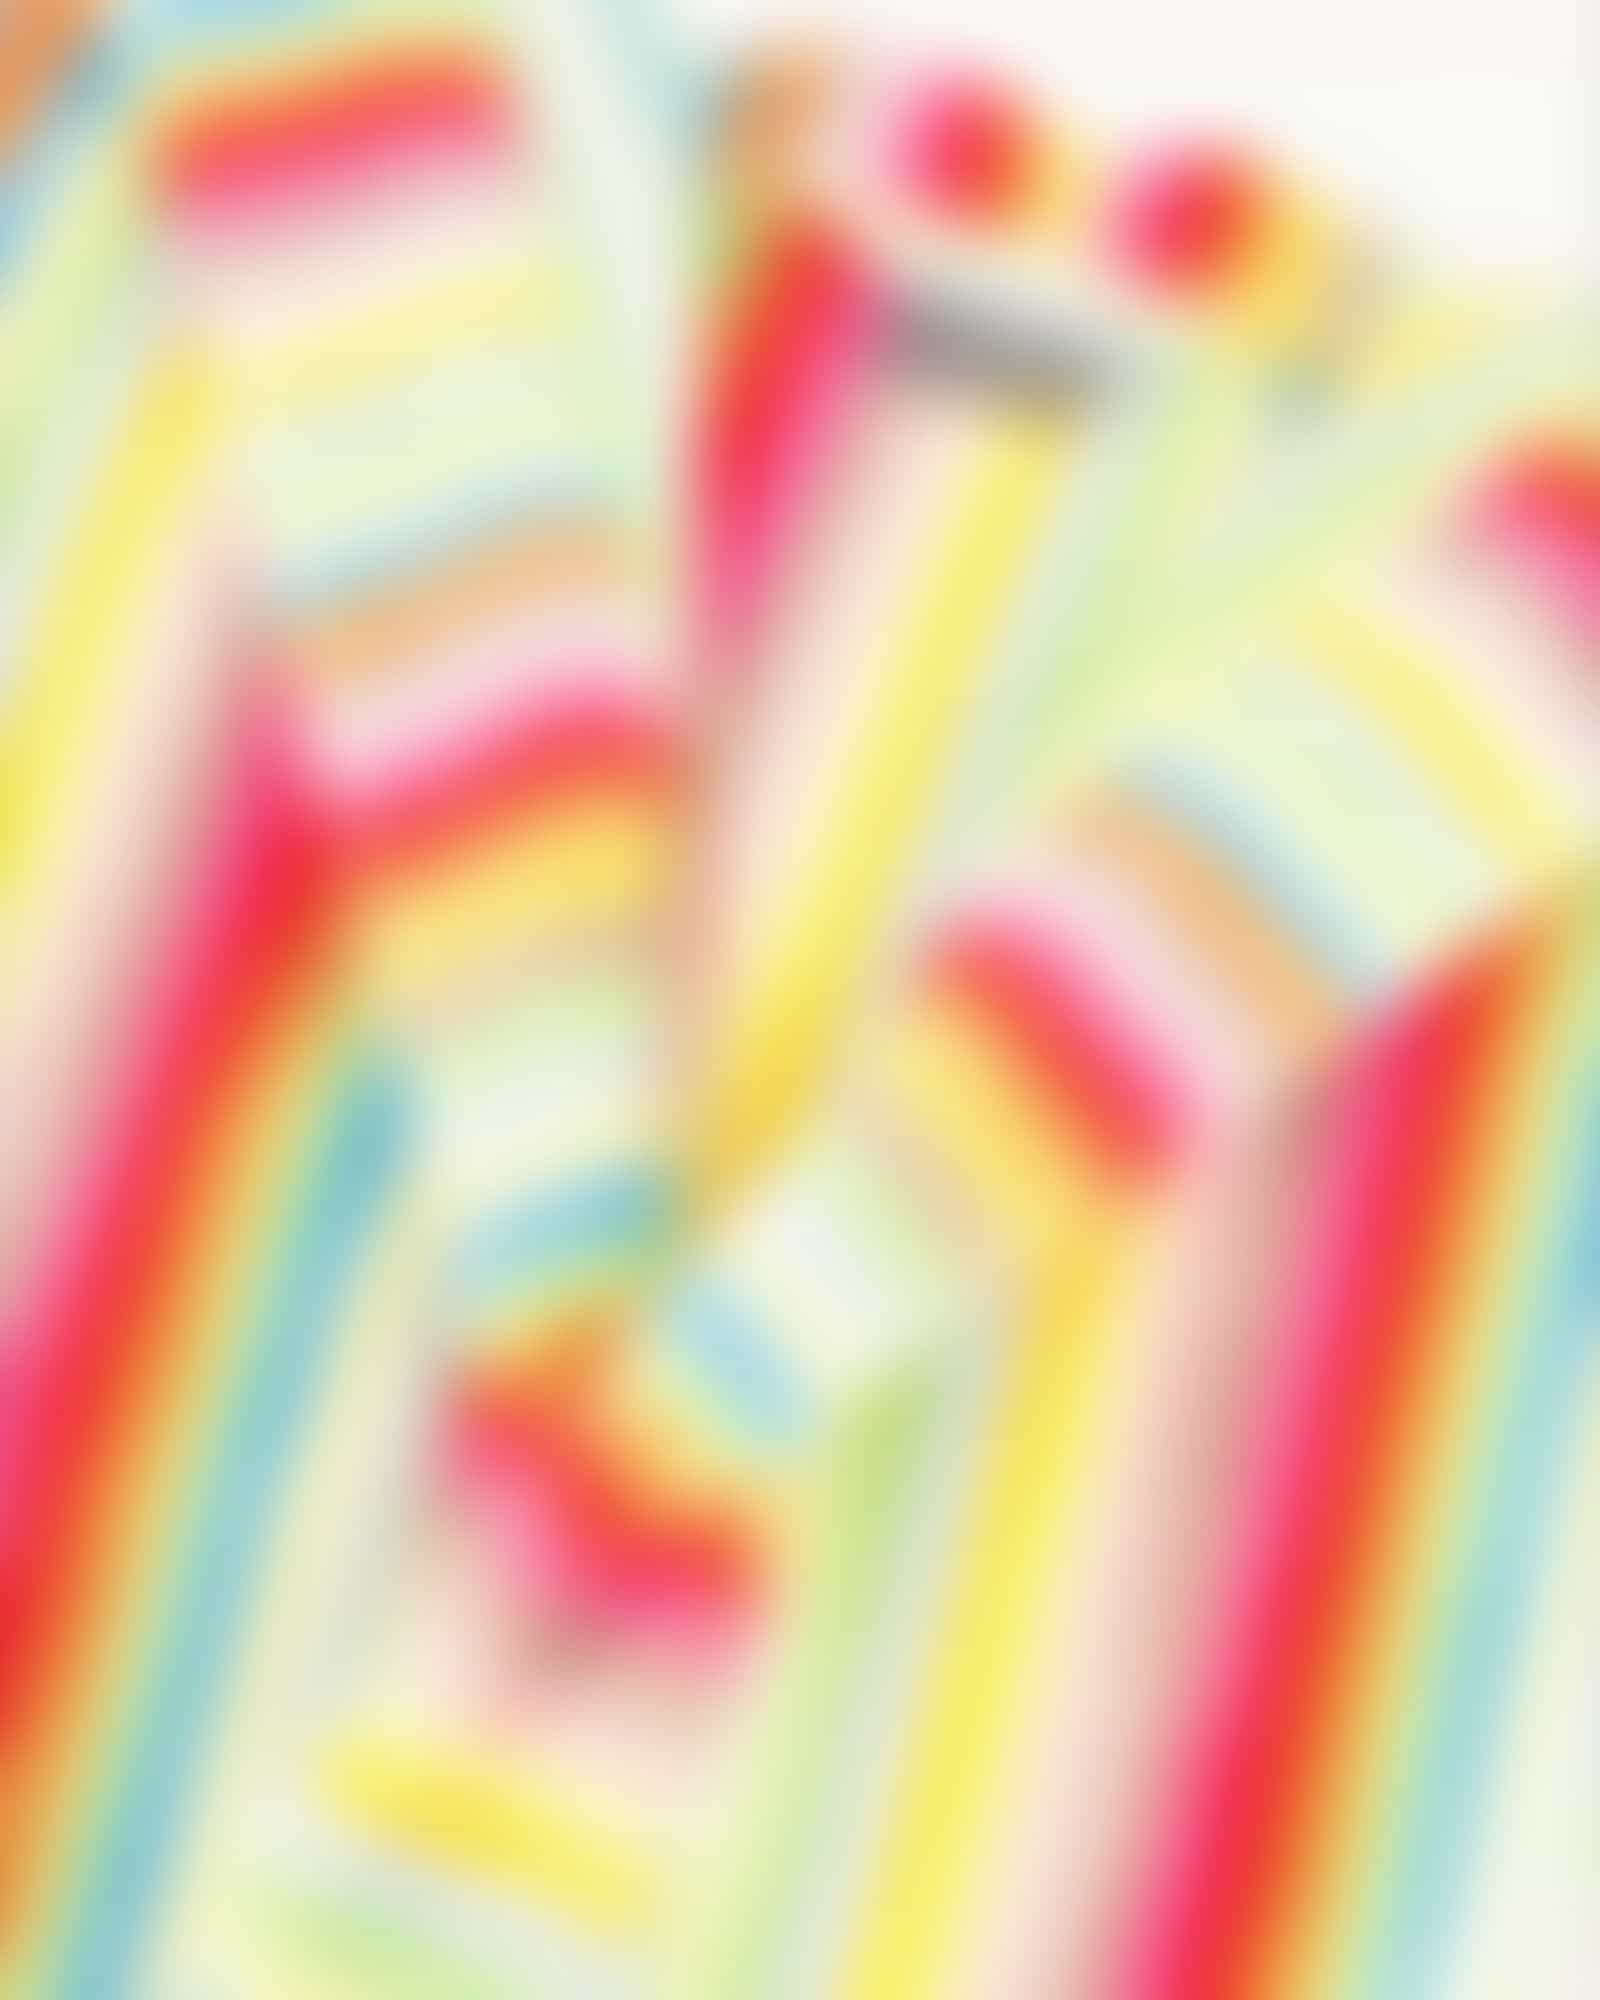 Cawö - Damen Bademantel Life Style - Kurzmantel mit Kapuze 7082 - Farbe: multicolor - 25